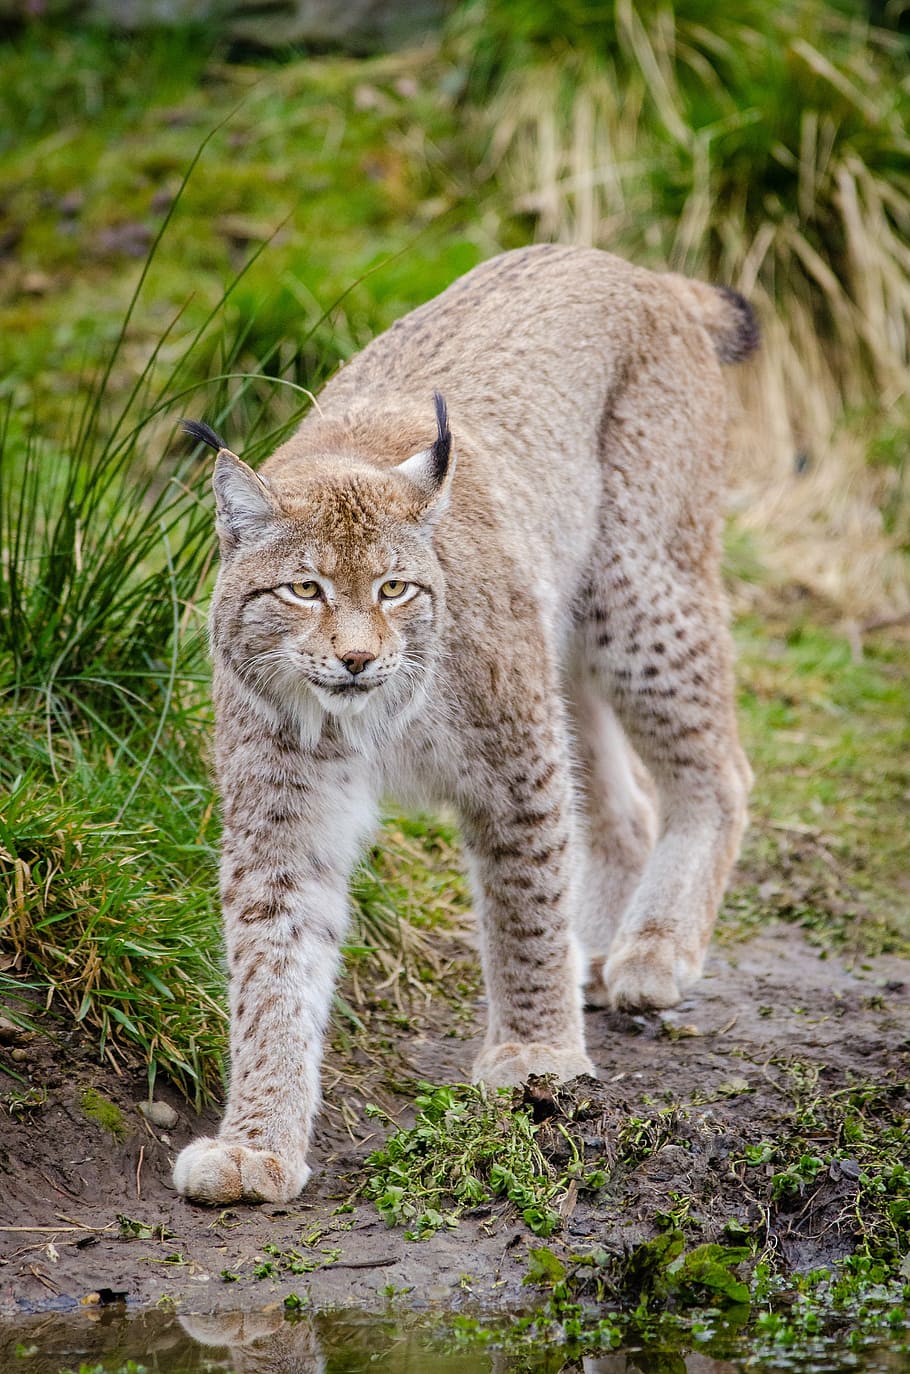 lynx, walking, grass, feline, mammal, subfamily of felines, face adorned favorites, triangular ears, predator, carnivore